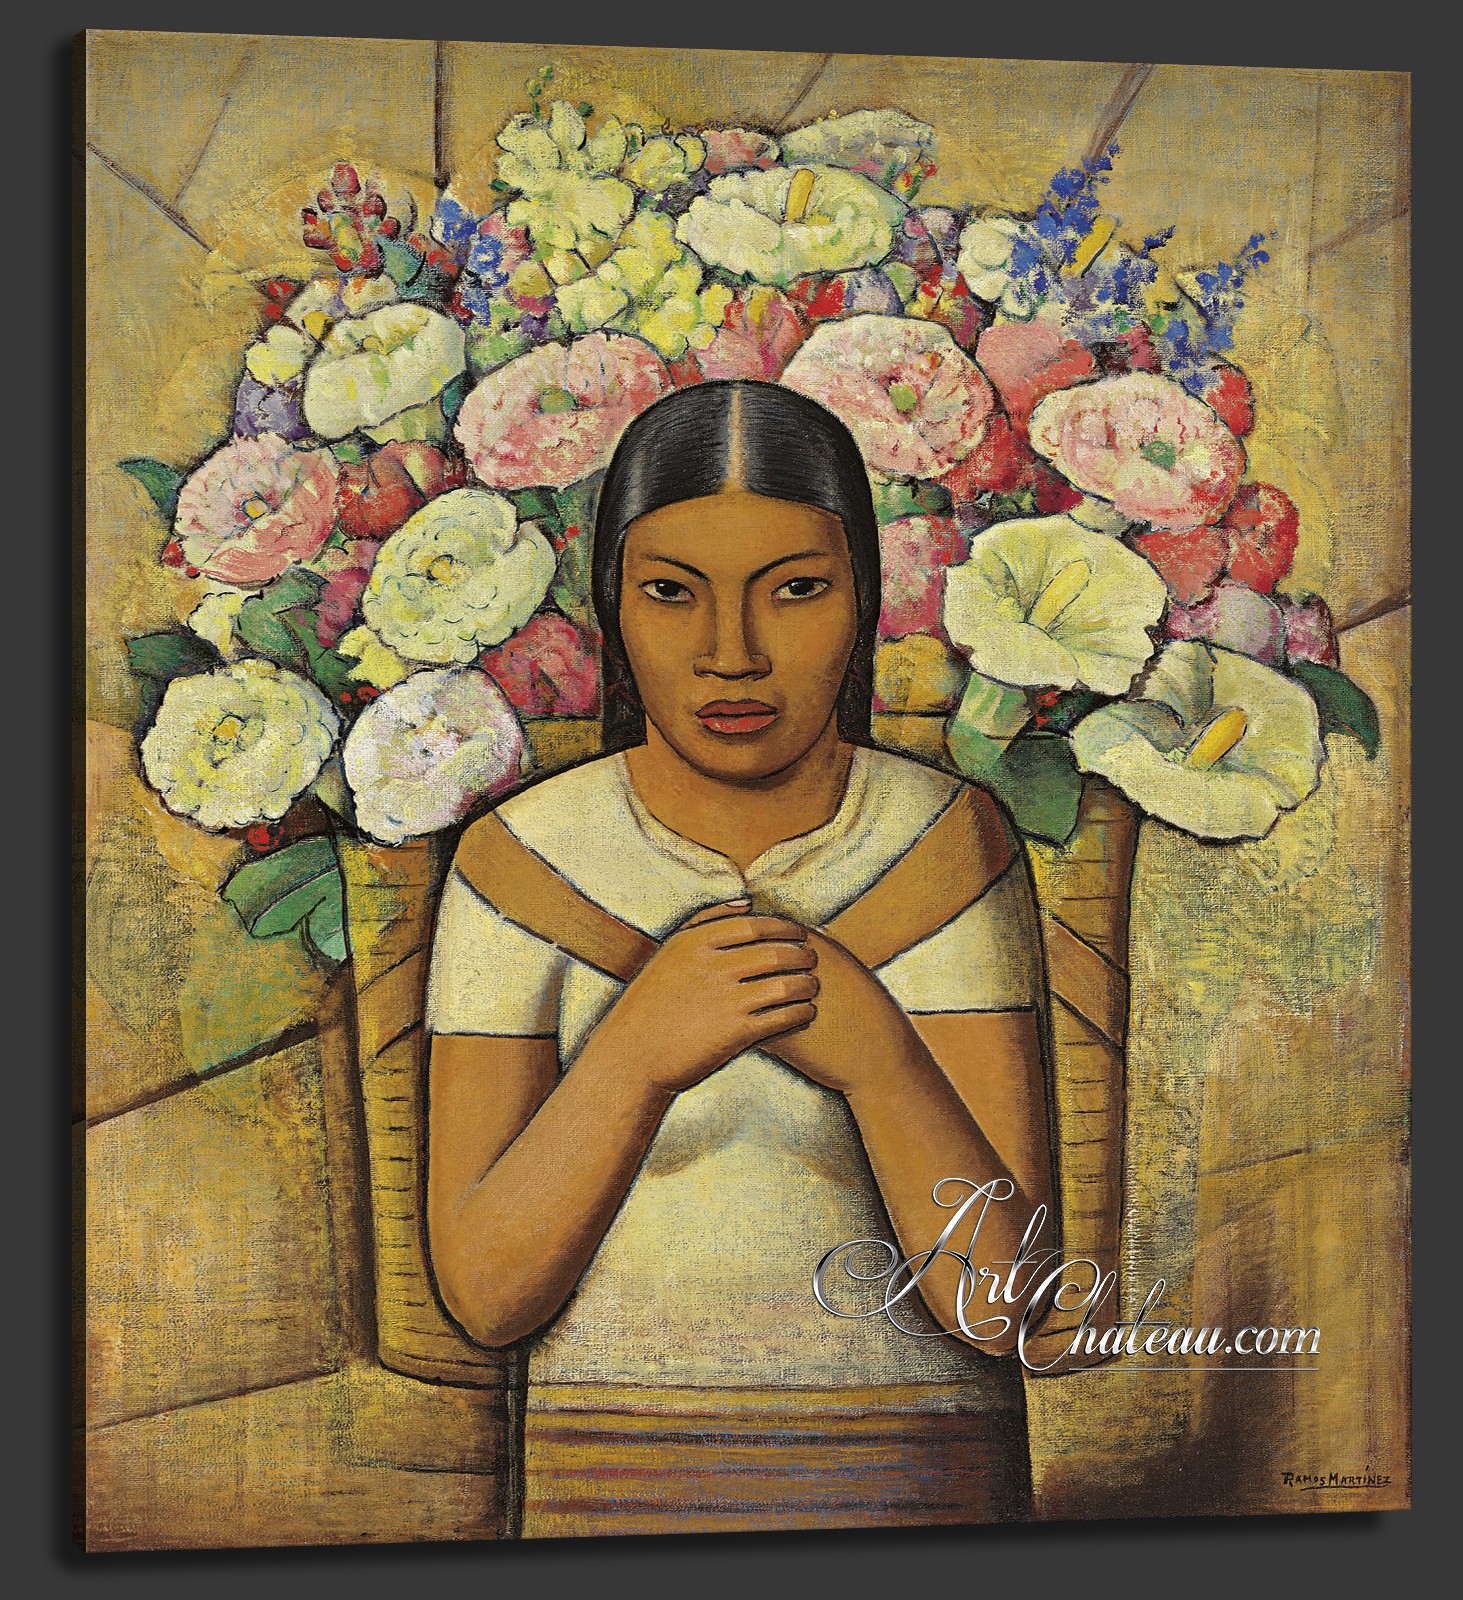 Vendedora de flores, after Alfredo Ramos Martínez